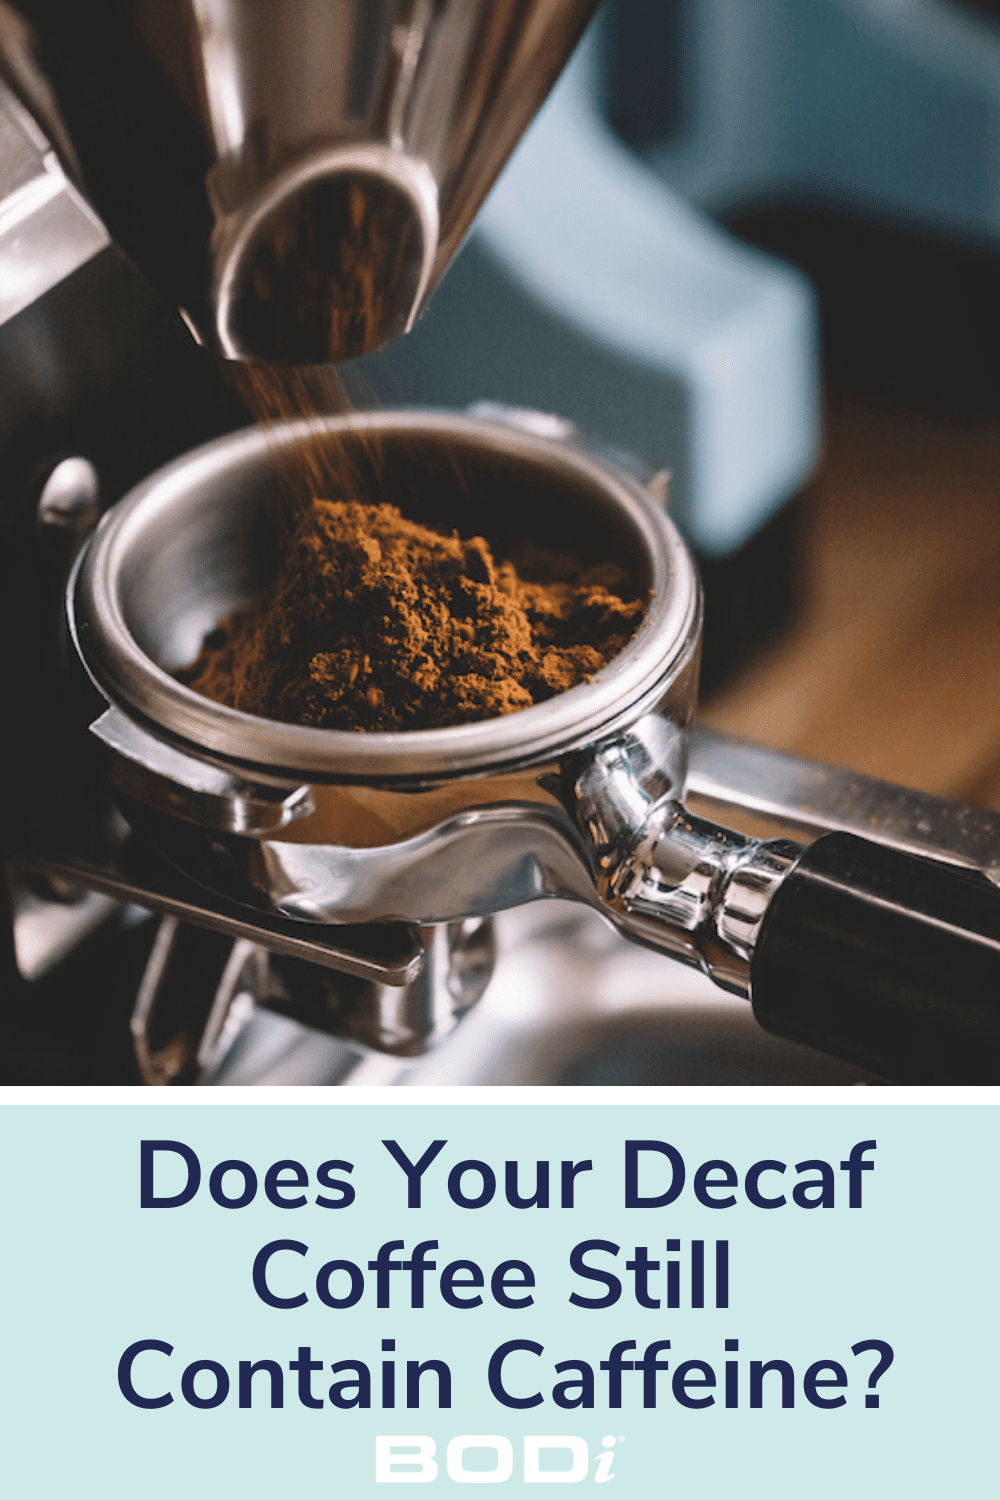 BODi Pin Image of Coffee Being Pressed | Decaf Coffee Caffeine